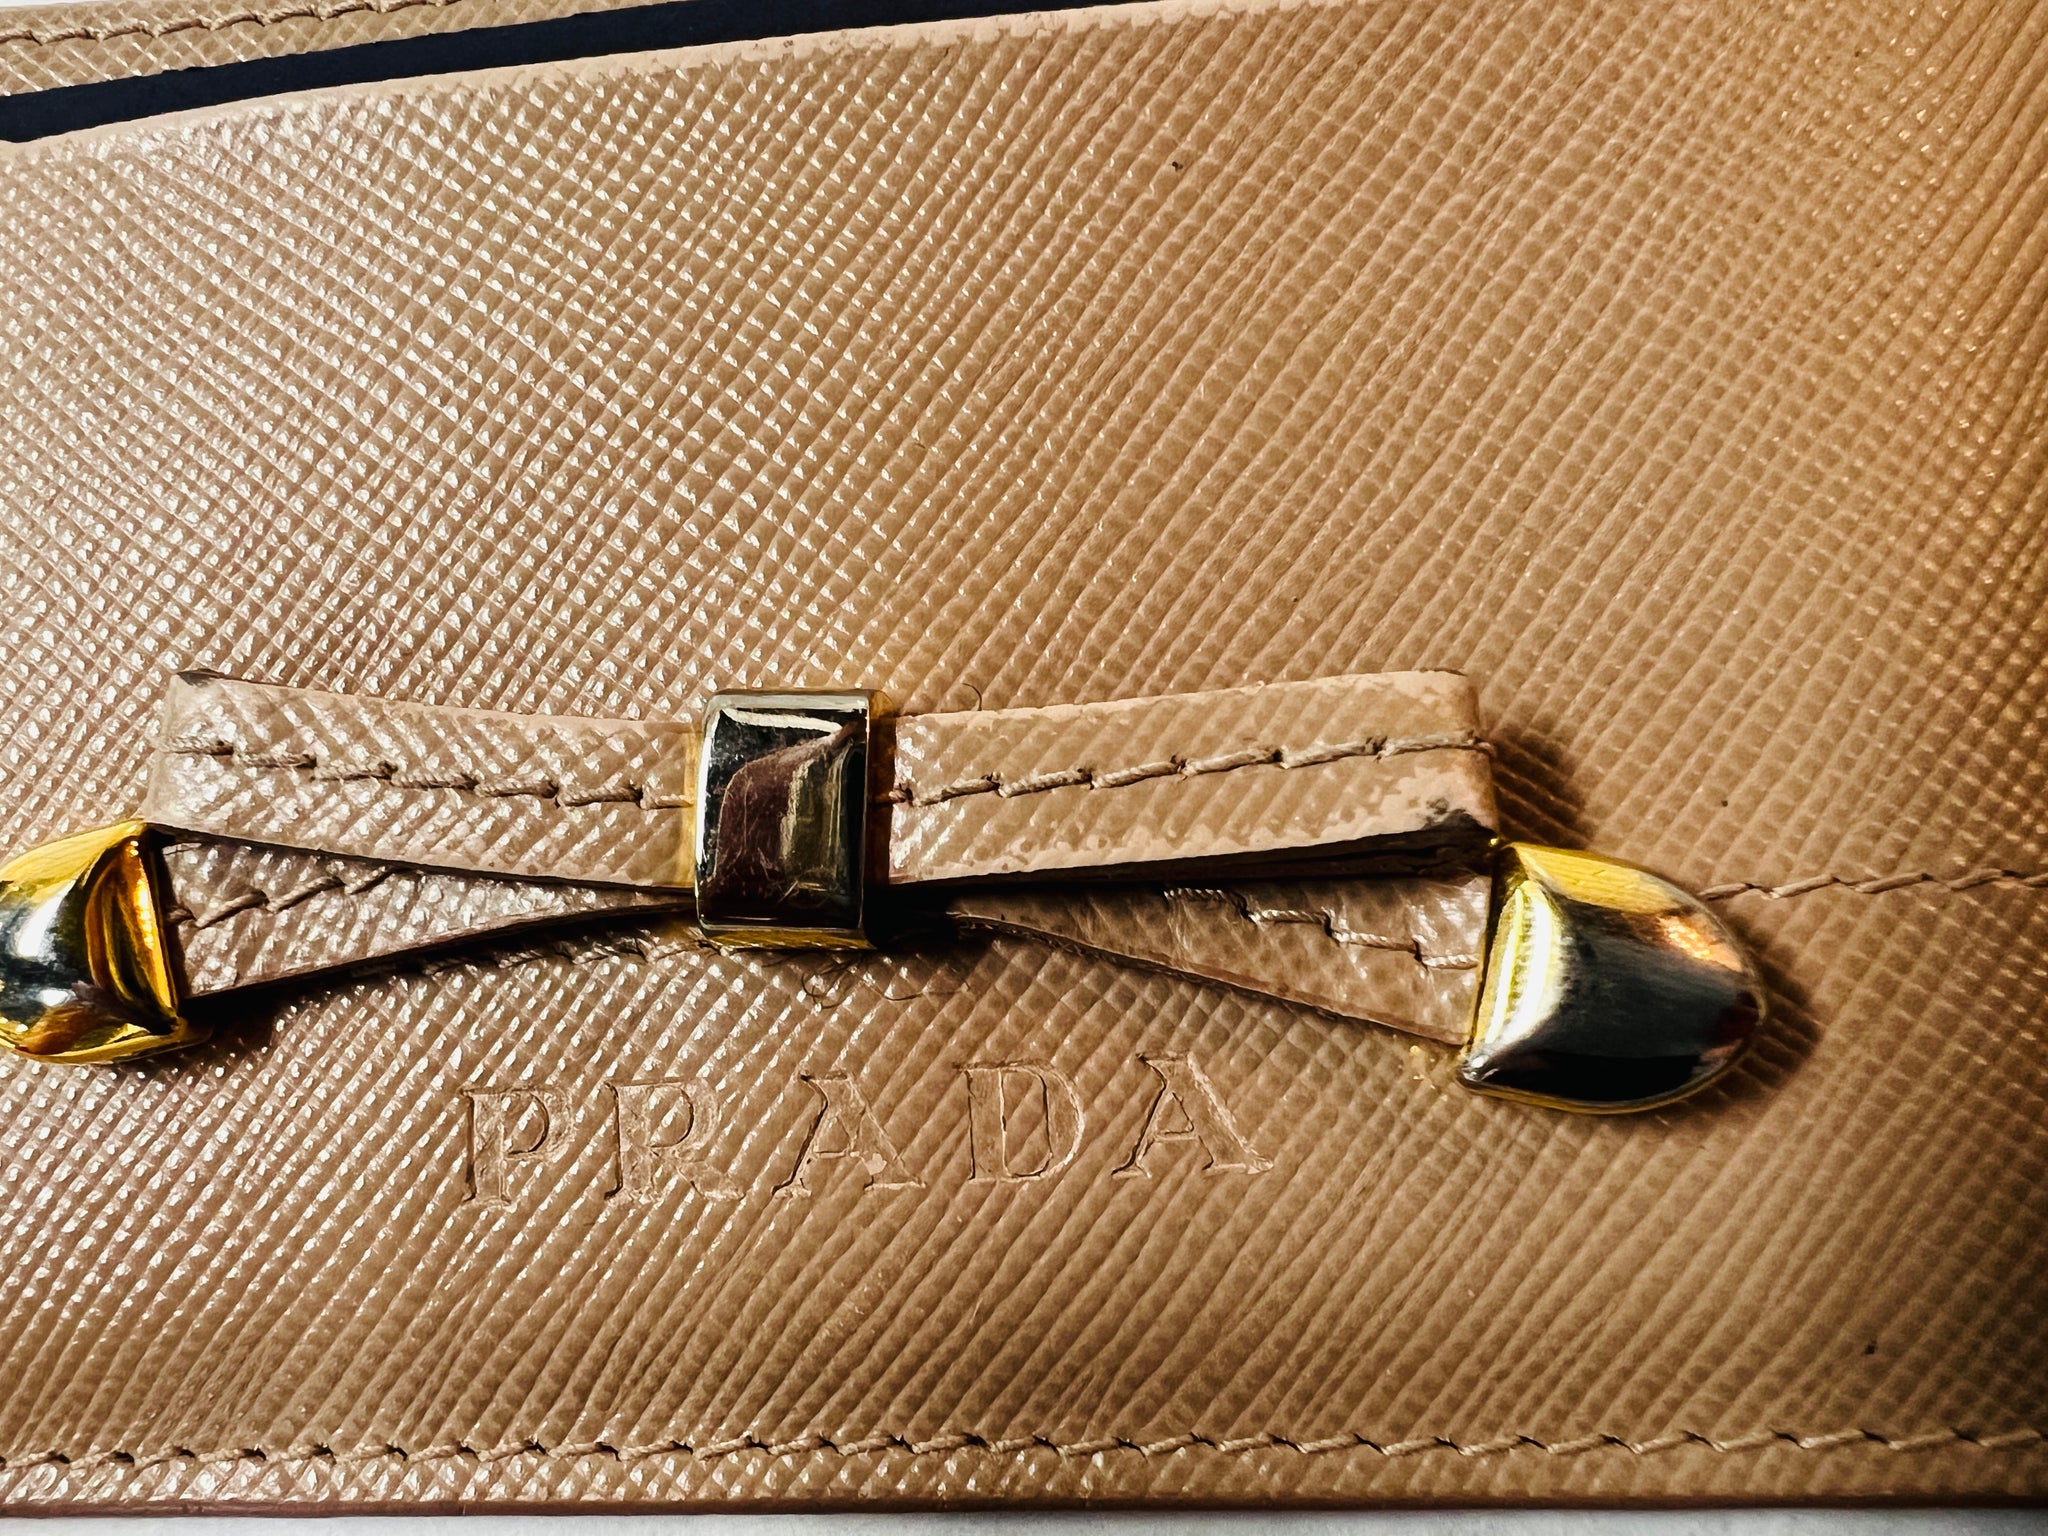 Prada Cammeo Saffiano Leather Bow Flap Wallet